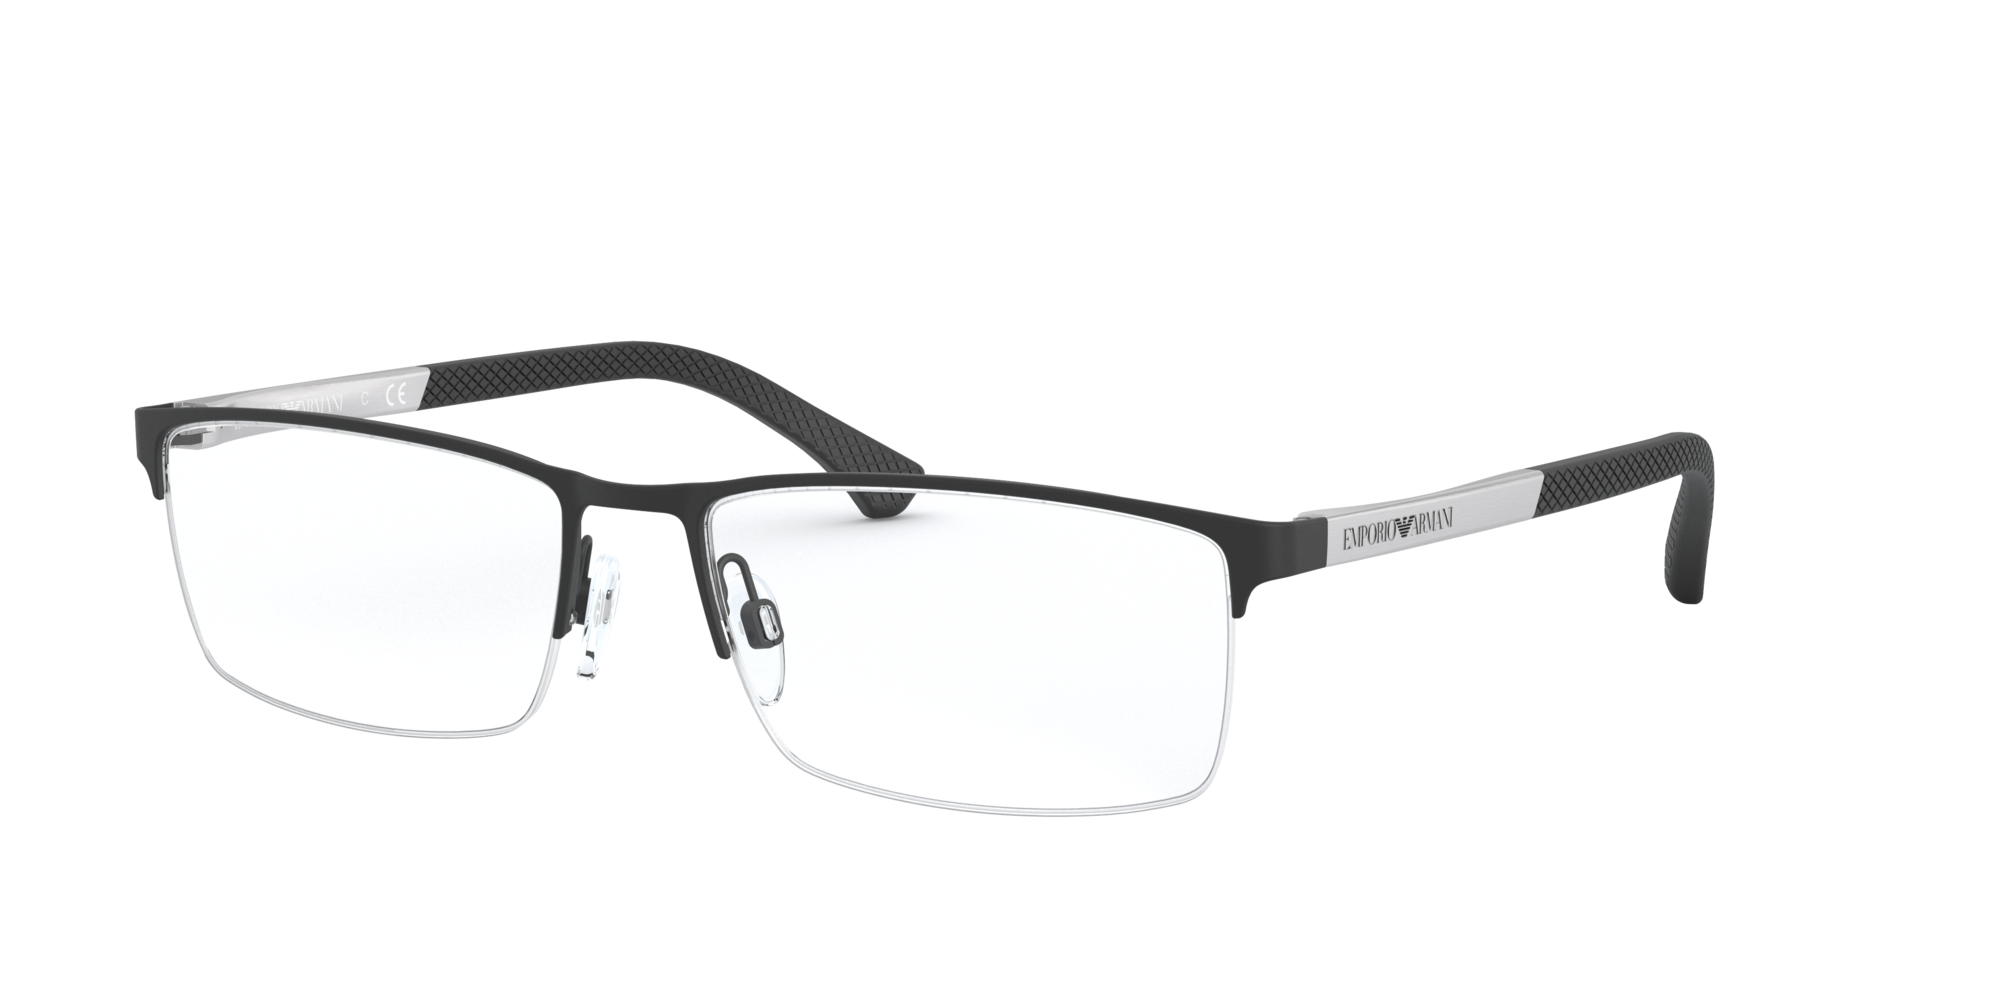 Angle_Left01 Emporio Armani EA 1041 Glasses Transparent / Black